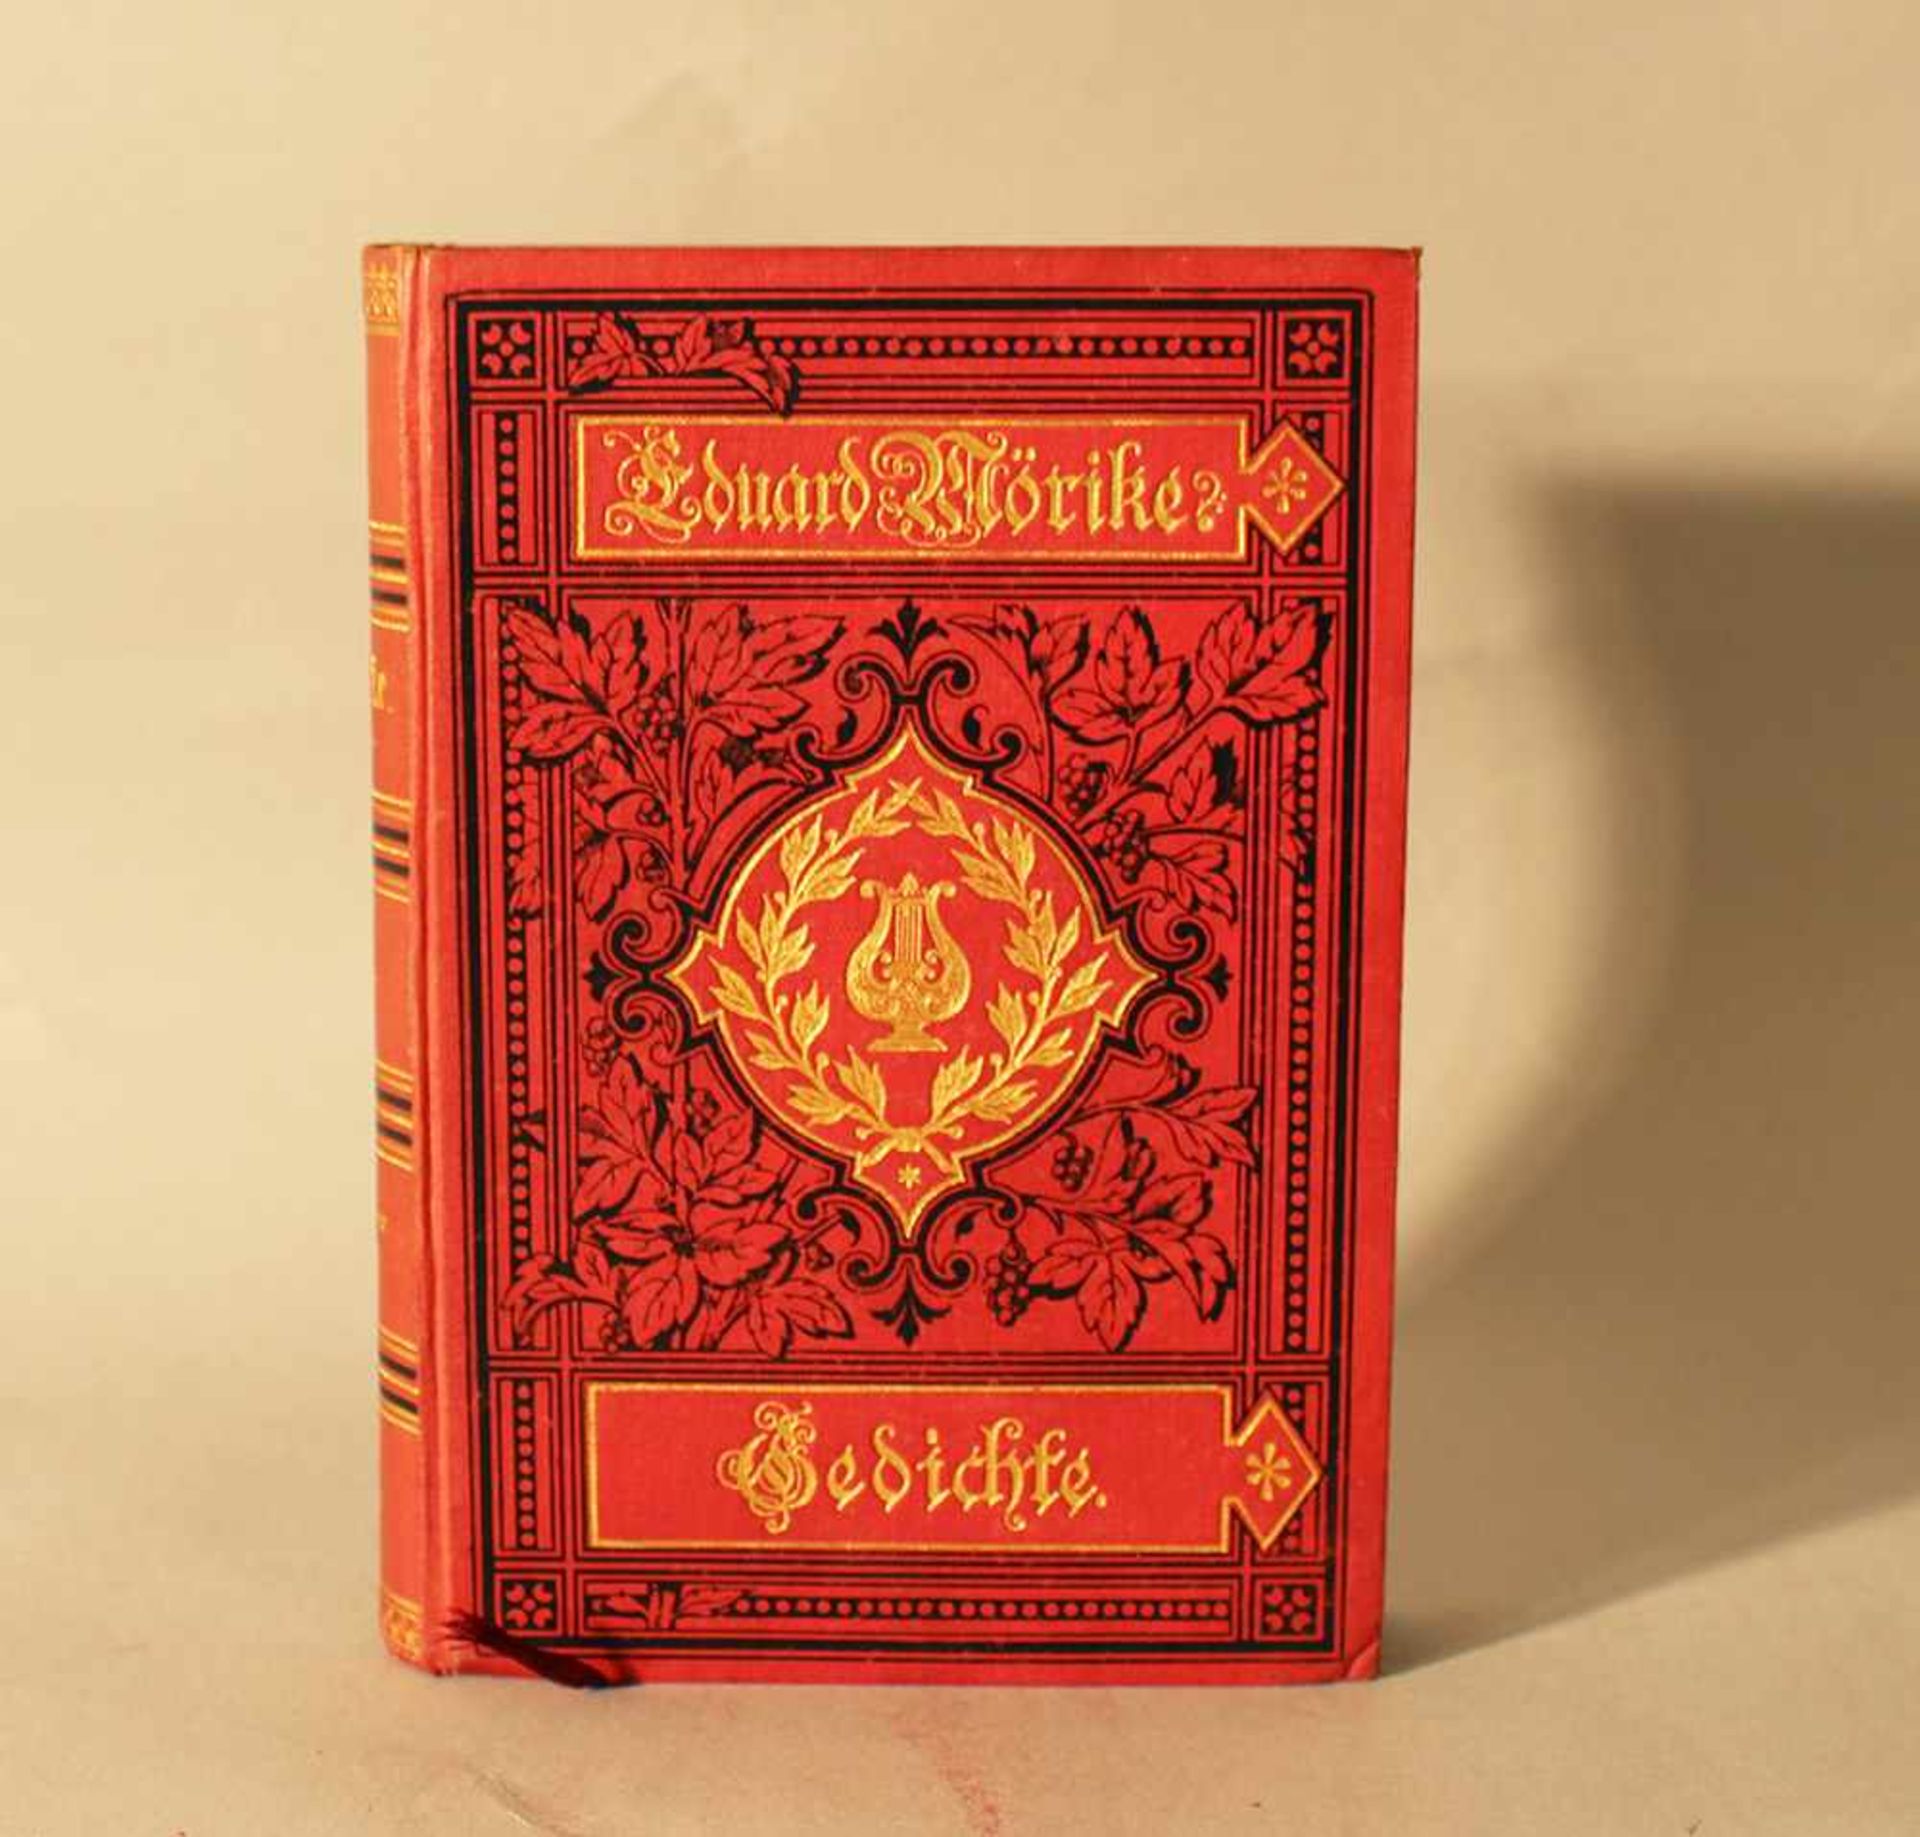 Eduard Mörike, Poems, Leipzig 1904, in red and gilded hard-cover.18 x 12 cmDieses Los wird in